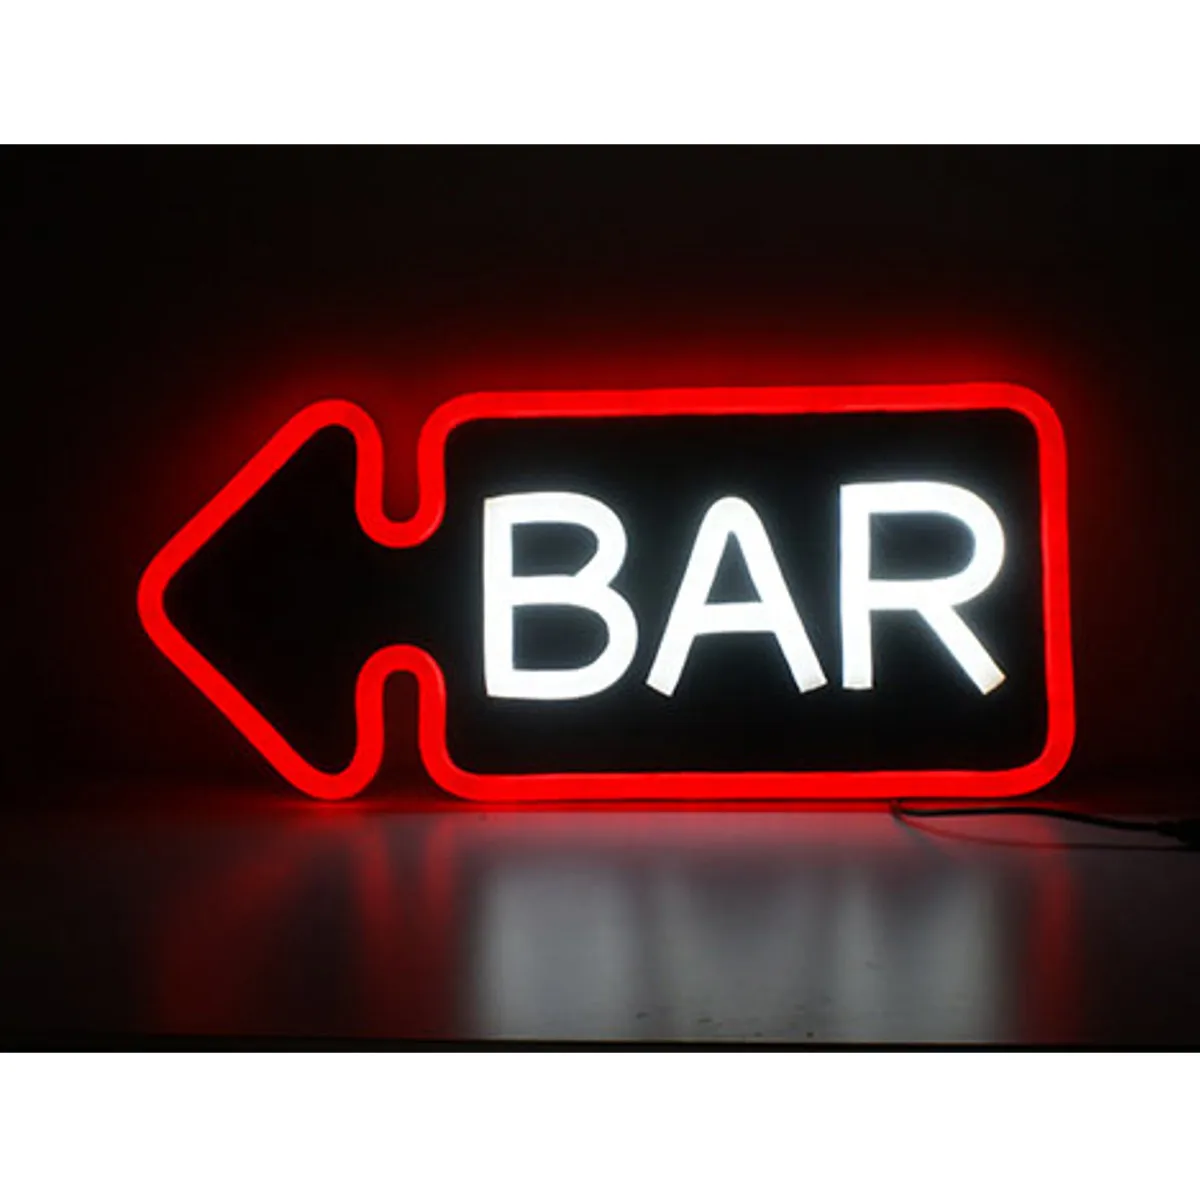 PVC BAR Neon Skilt LED Lys Håndlavet Visuel Kunst Bar Club Væg Lampe Belysning Neon Pærer Bord 48*25*3cm 0